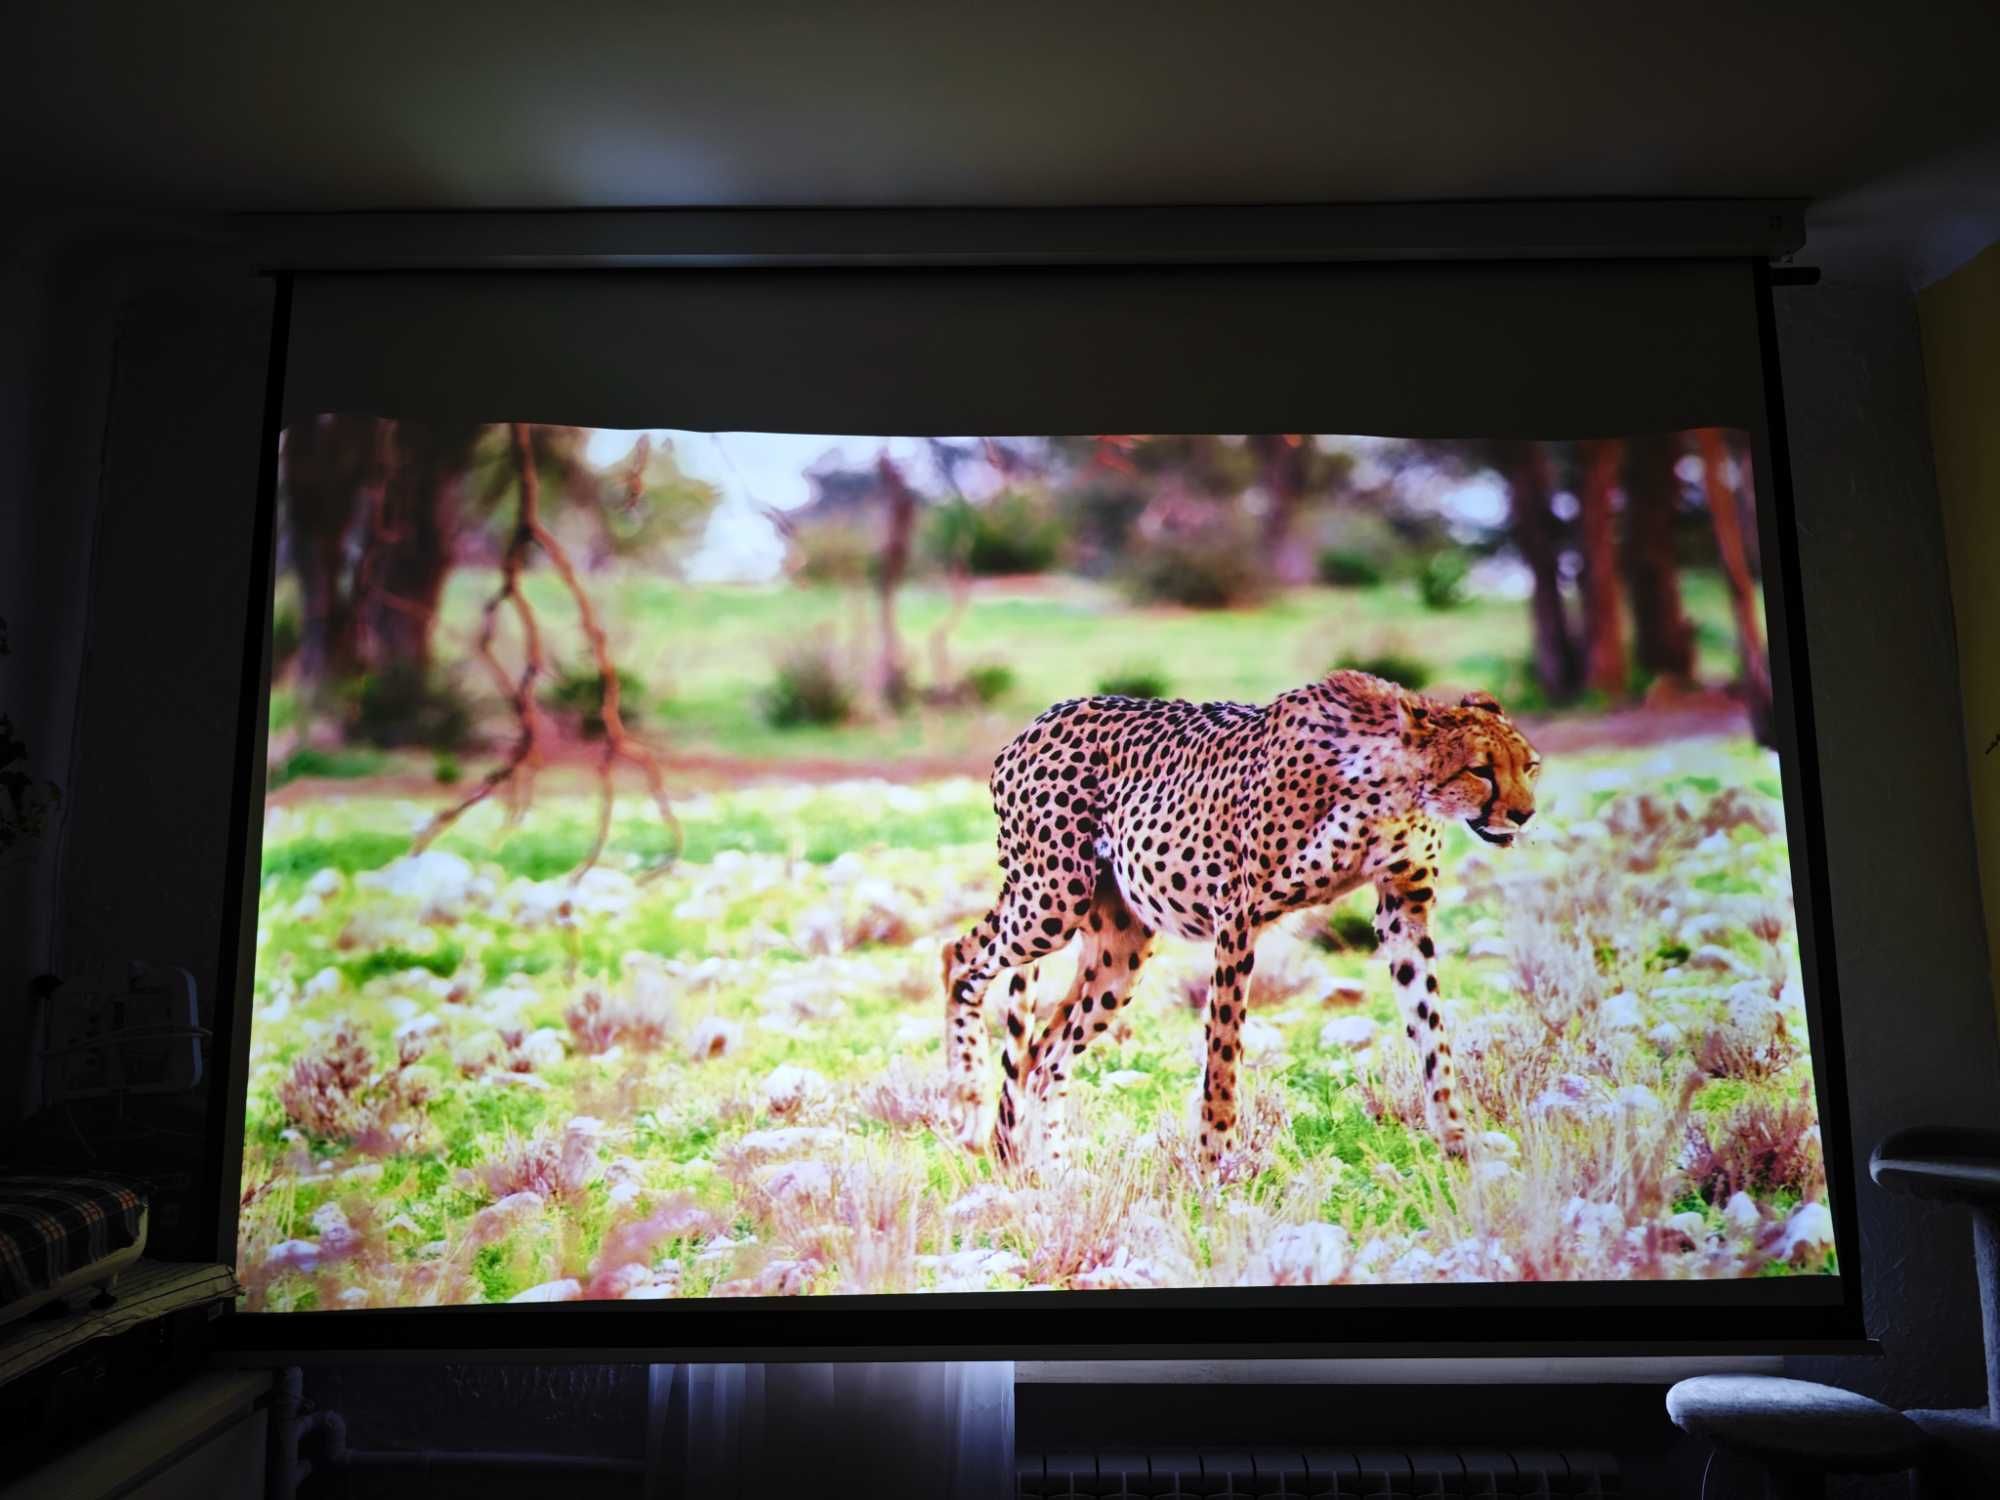 projektor UST full hd Dell S560 + ekran ellite screen